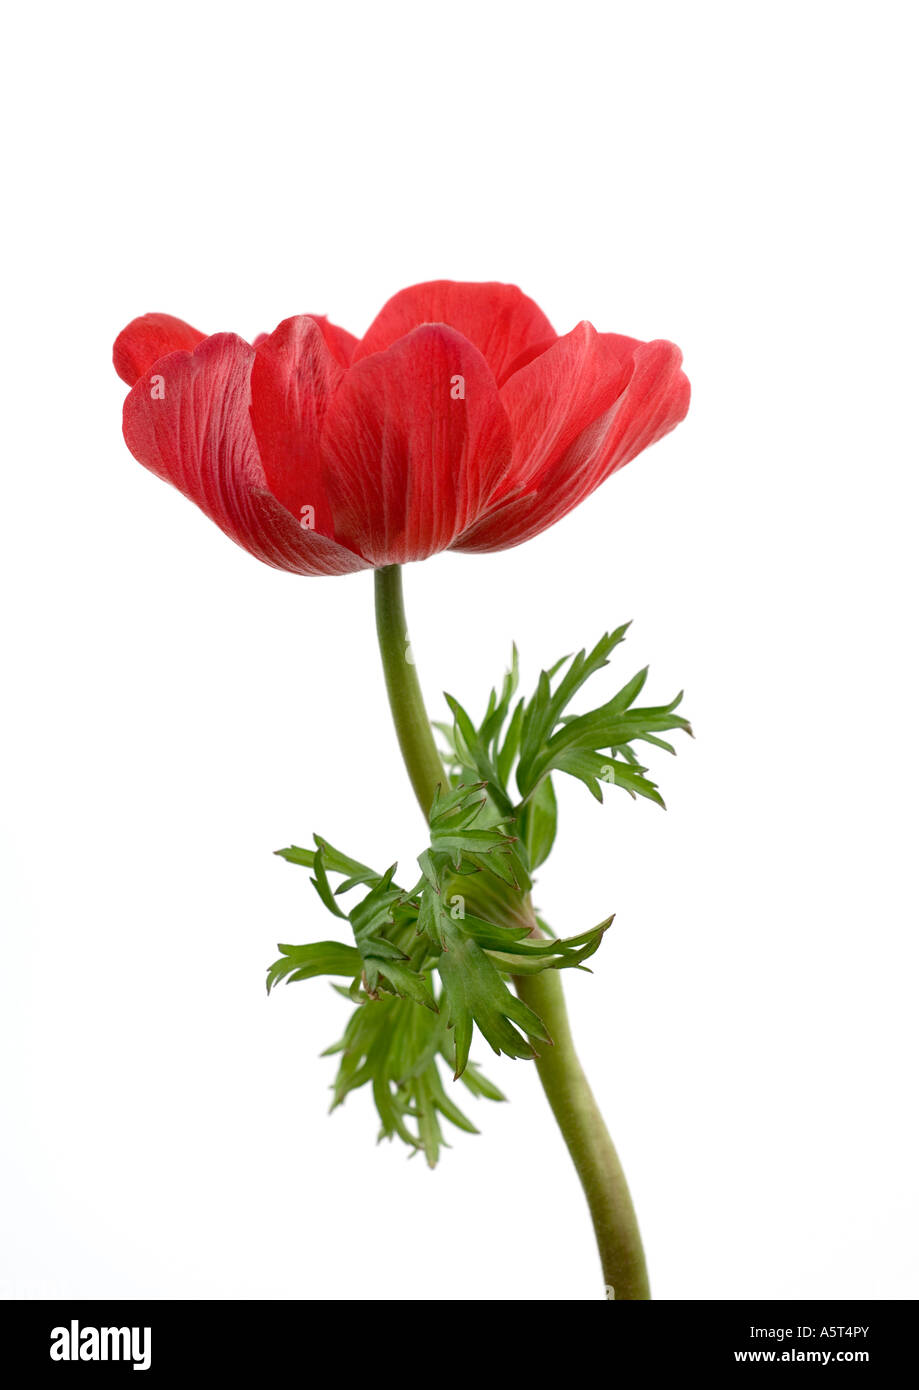 Fiore di anemone, close-up Foto Stock